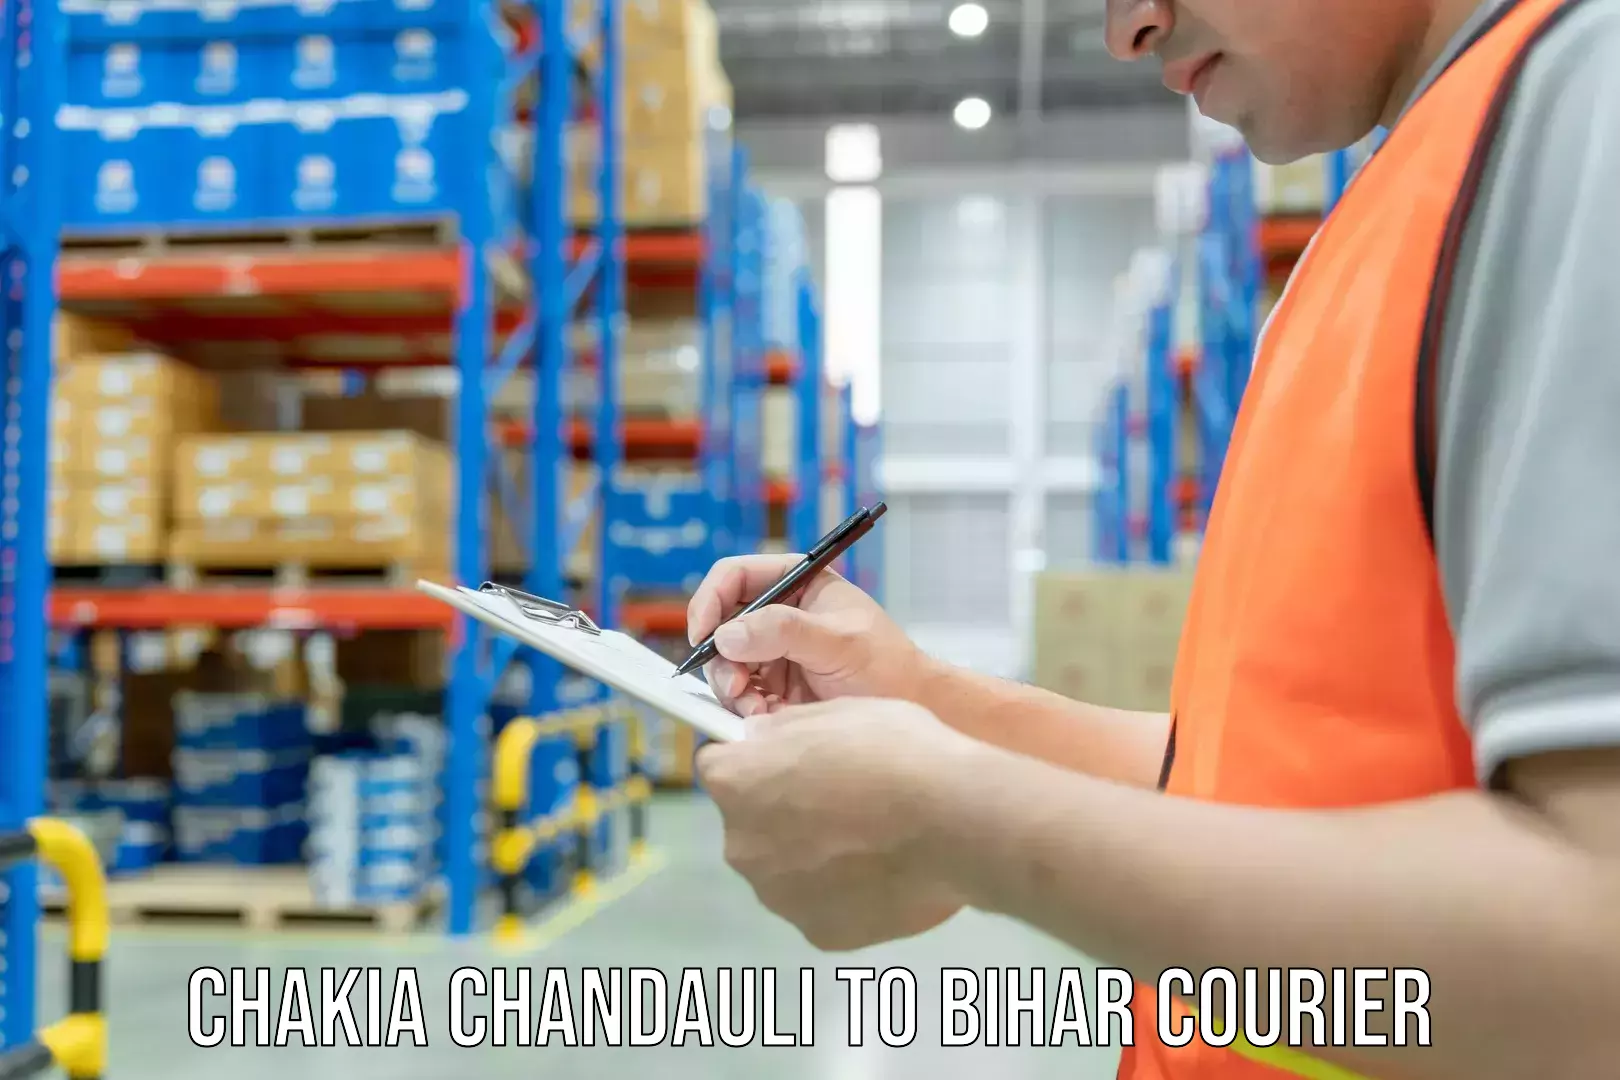 Multi-national courier services Chakia Chandauli to Bihar